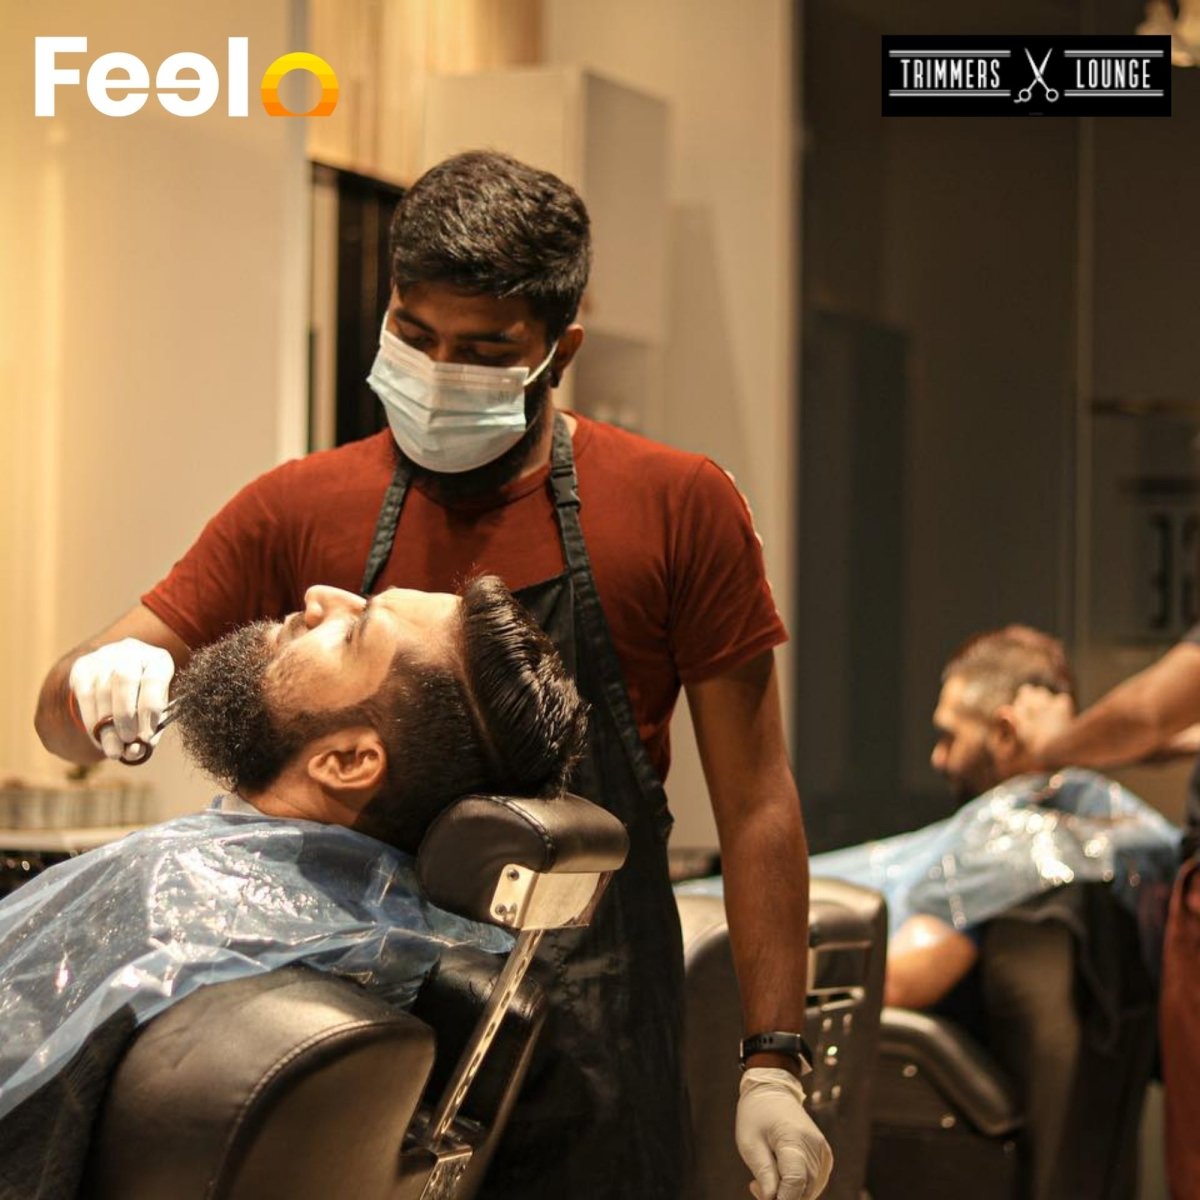 1x Mens Haircut + Beard (1hr) - Trimmers Lounge, Colombo 05 | Feelo